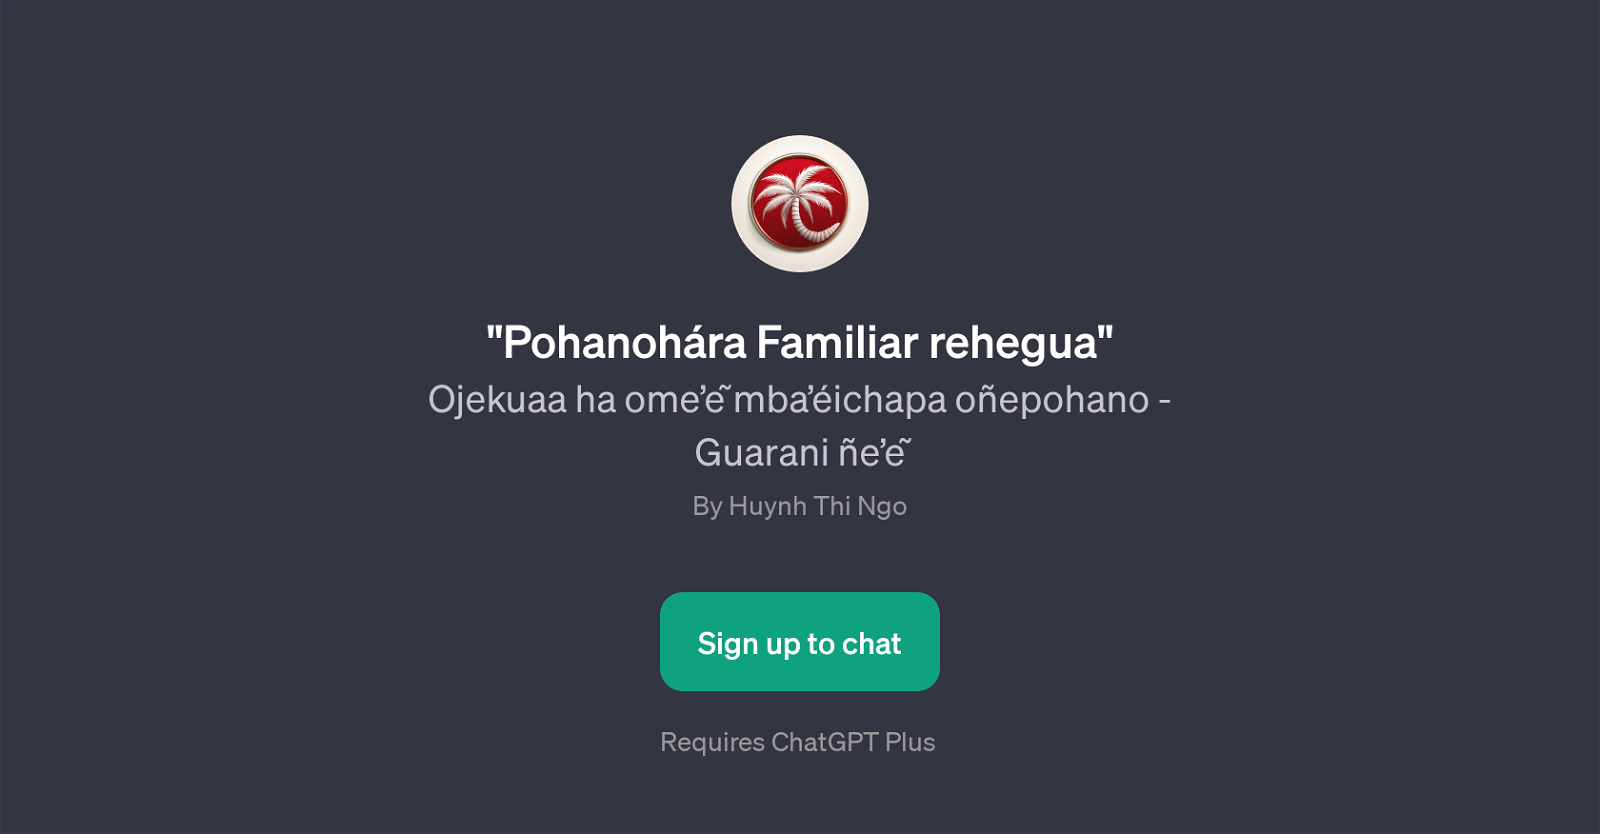 Pohanohra Familiar rehegua website